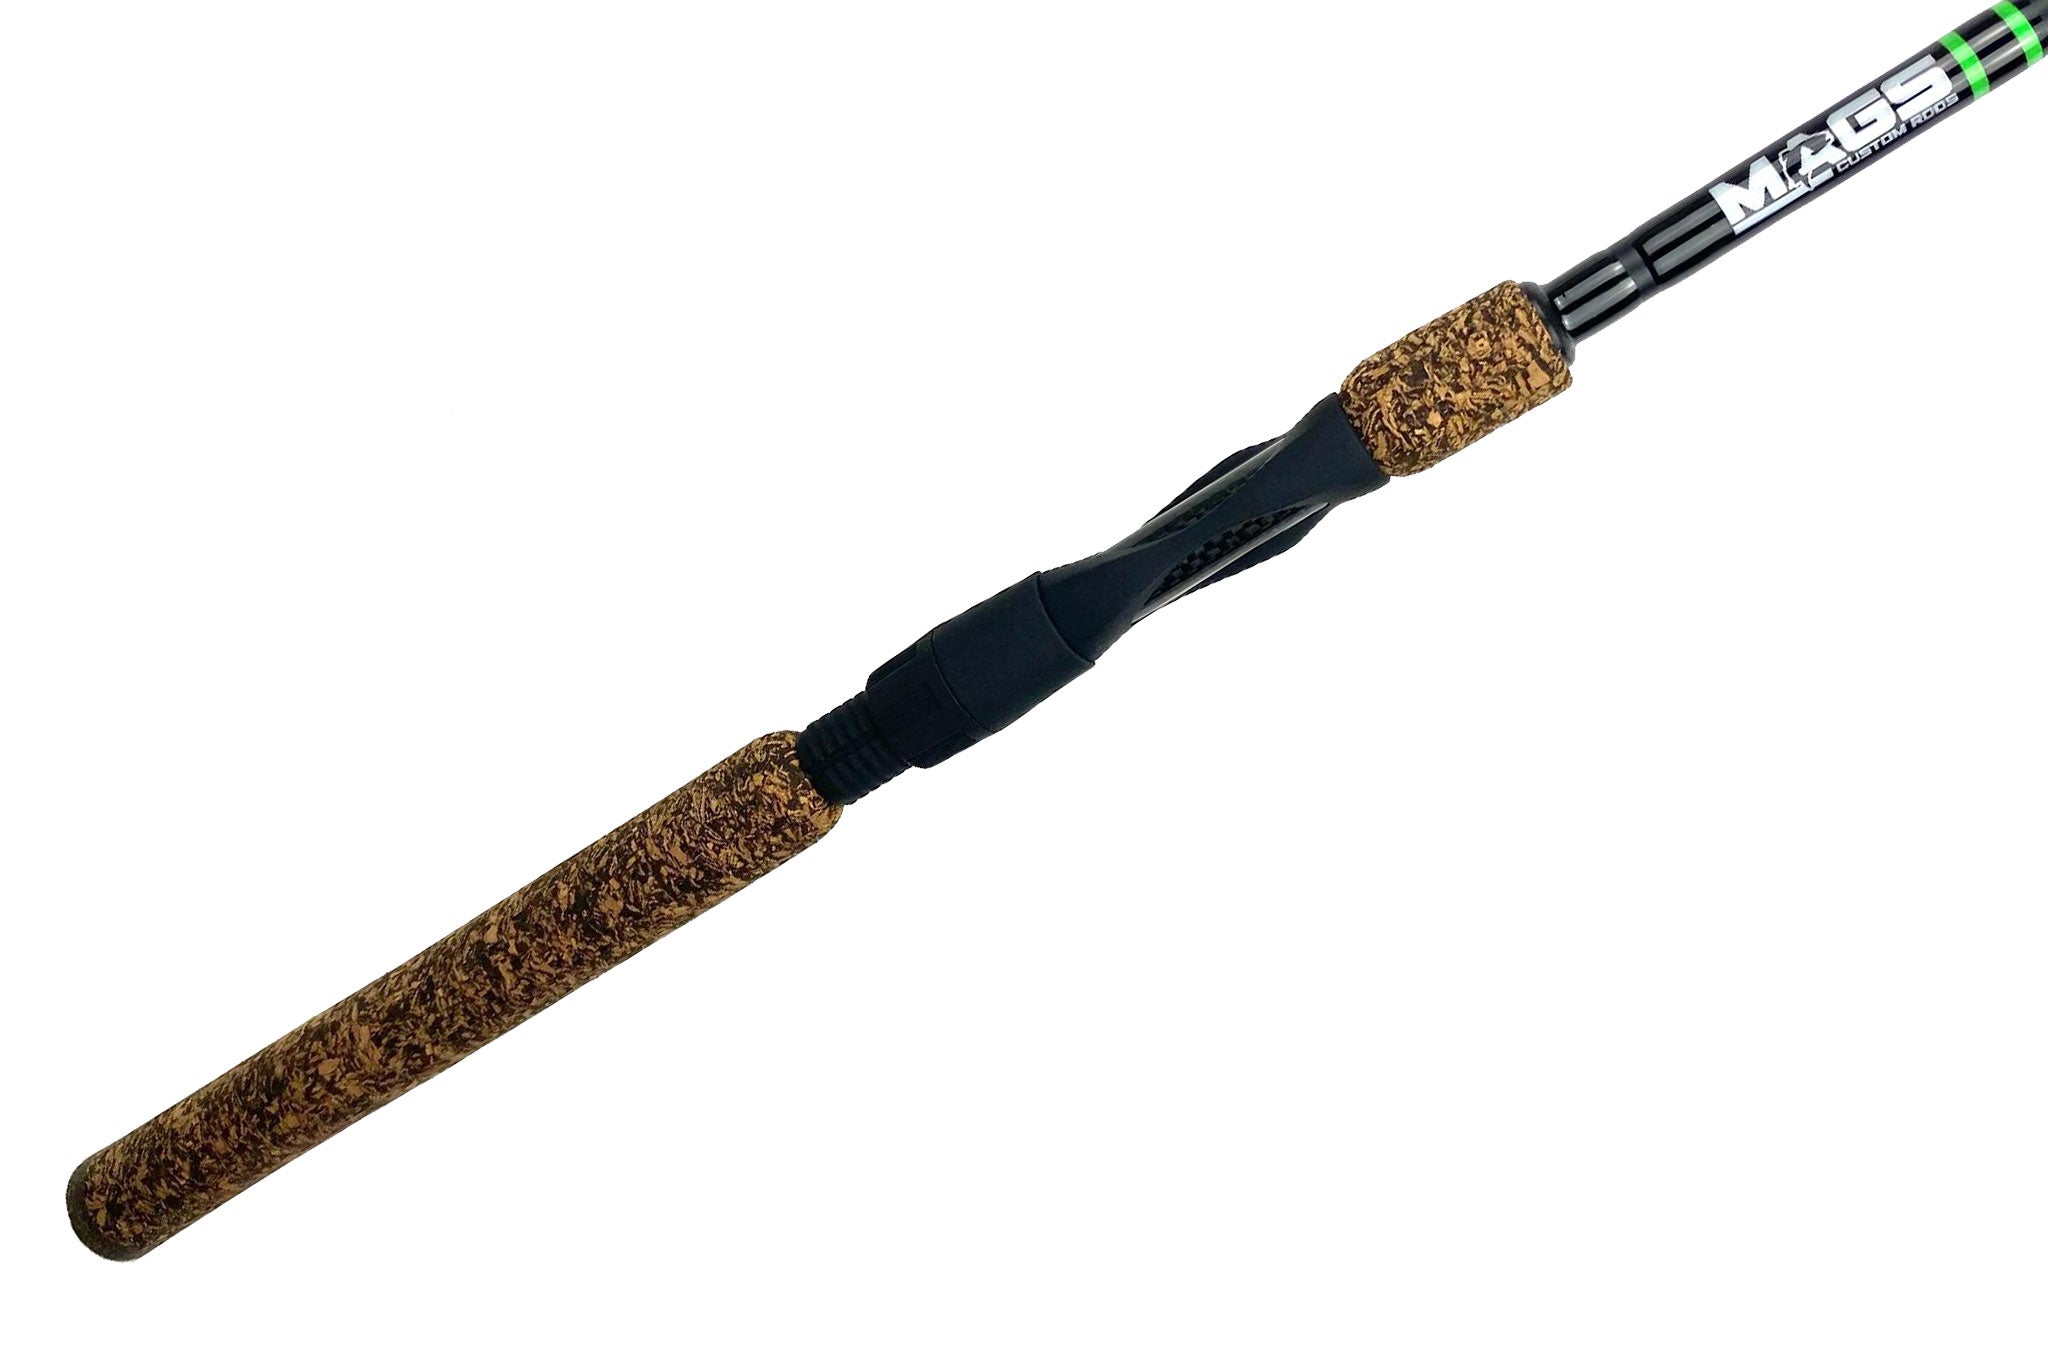 Third Rod - Guide Wrap  Custom fishing rods, Custom rods, Fishing rod